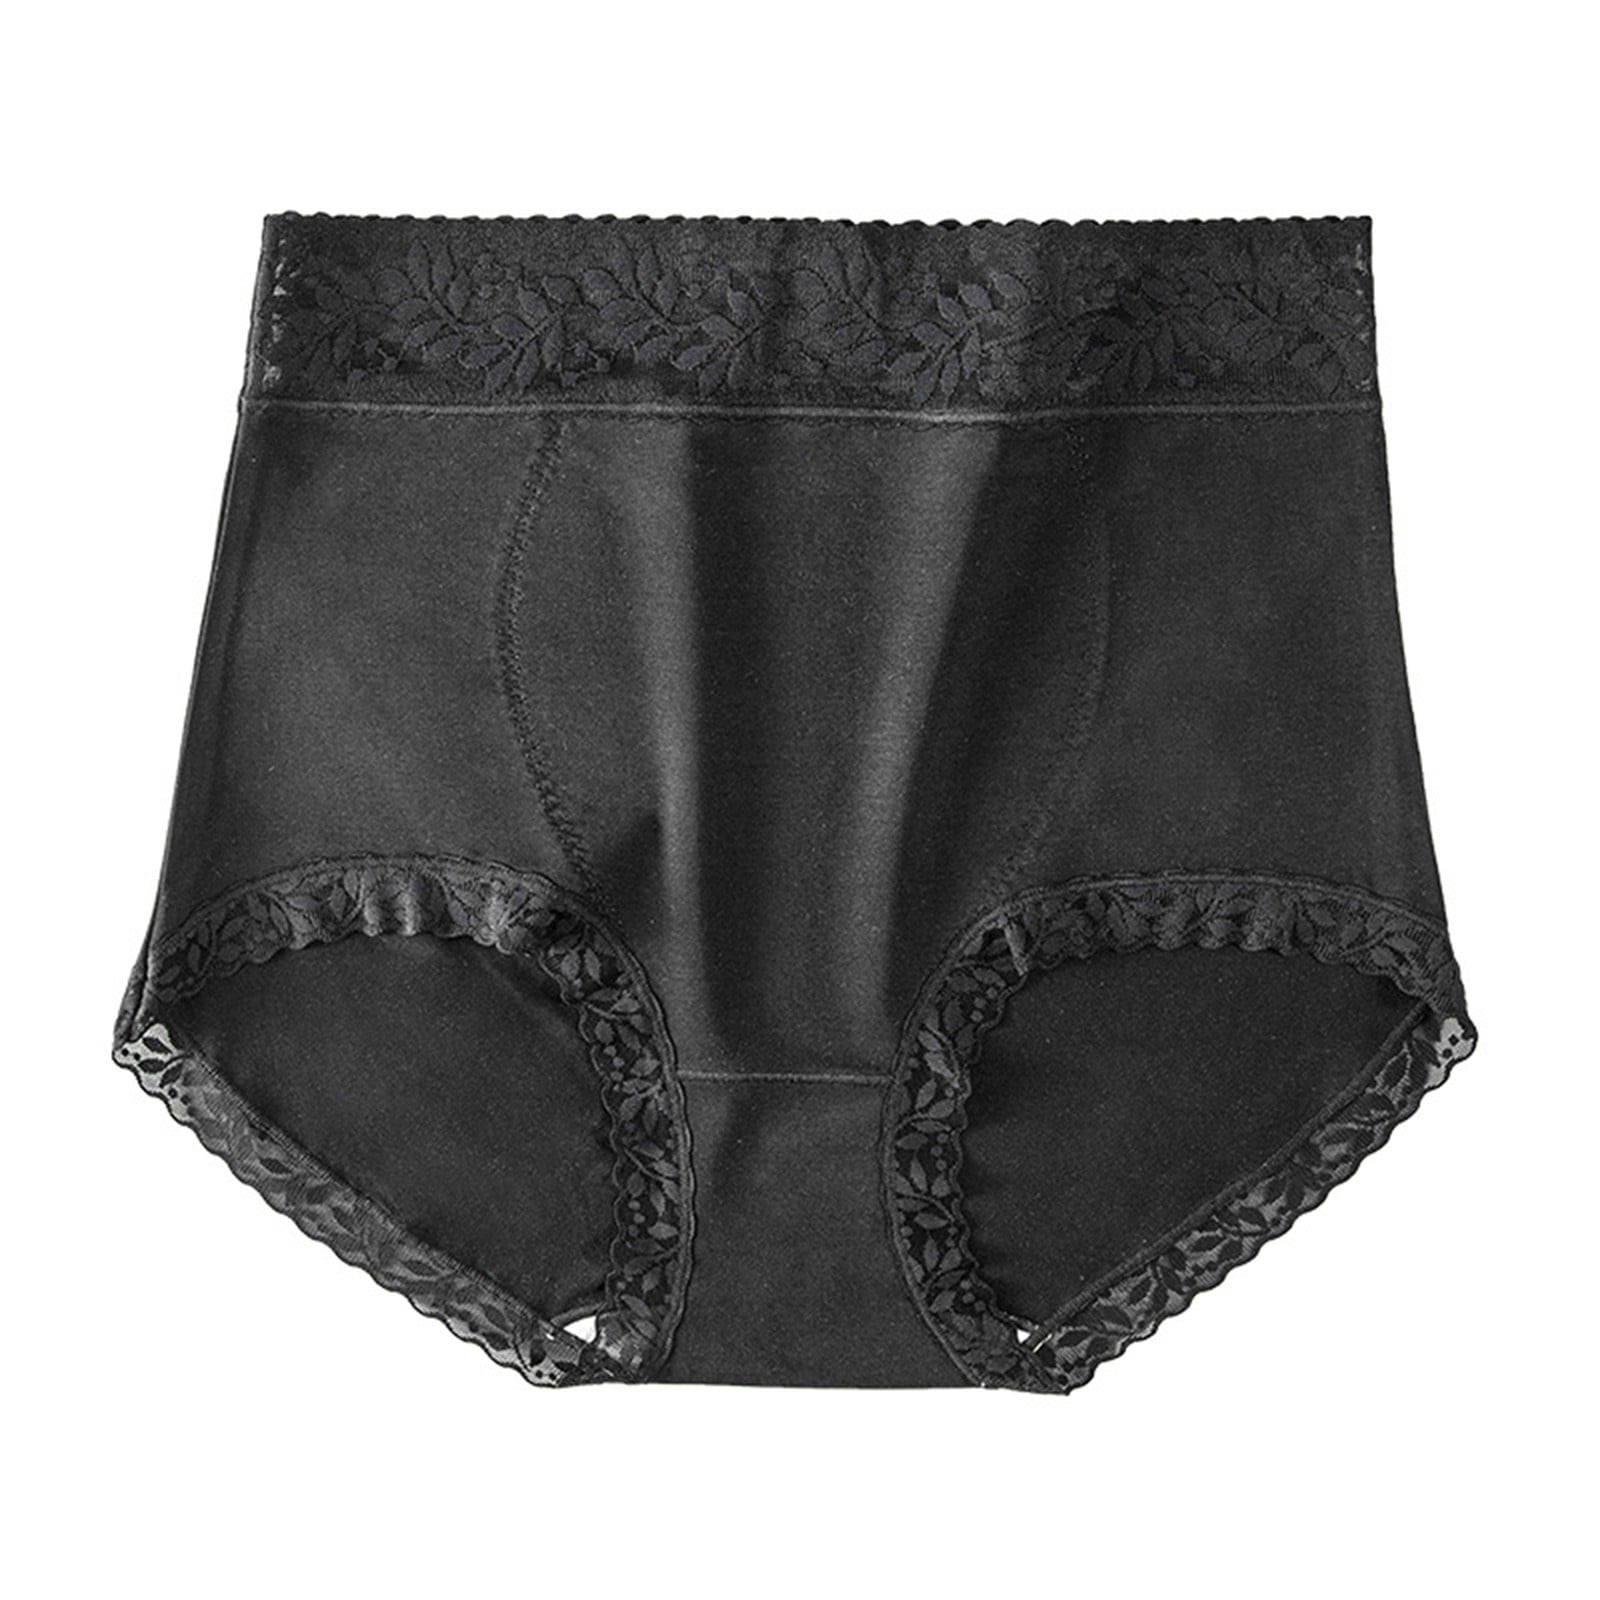 Buy ALTHEANRAY Women's Underwear Cotton Panties For Women, Soft Ladies Lace  Trim Underwear High Waisted Briefs 6 Pack, Black Cotton Underwear, Small at